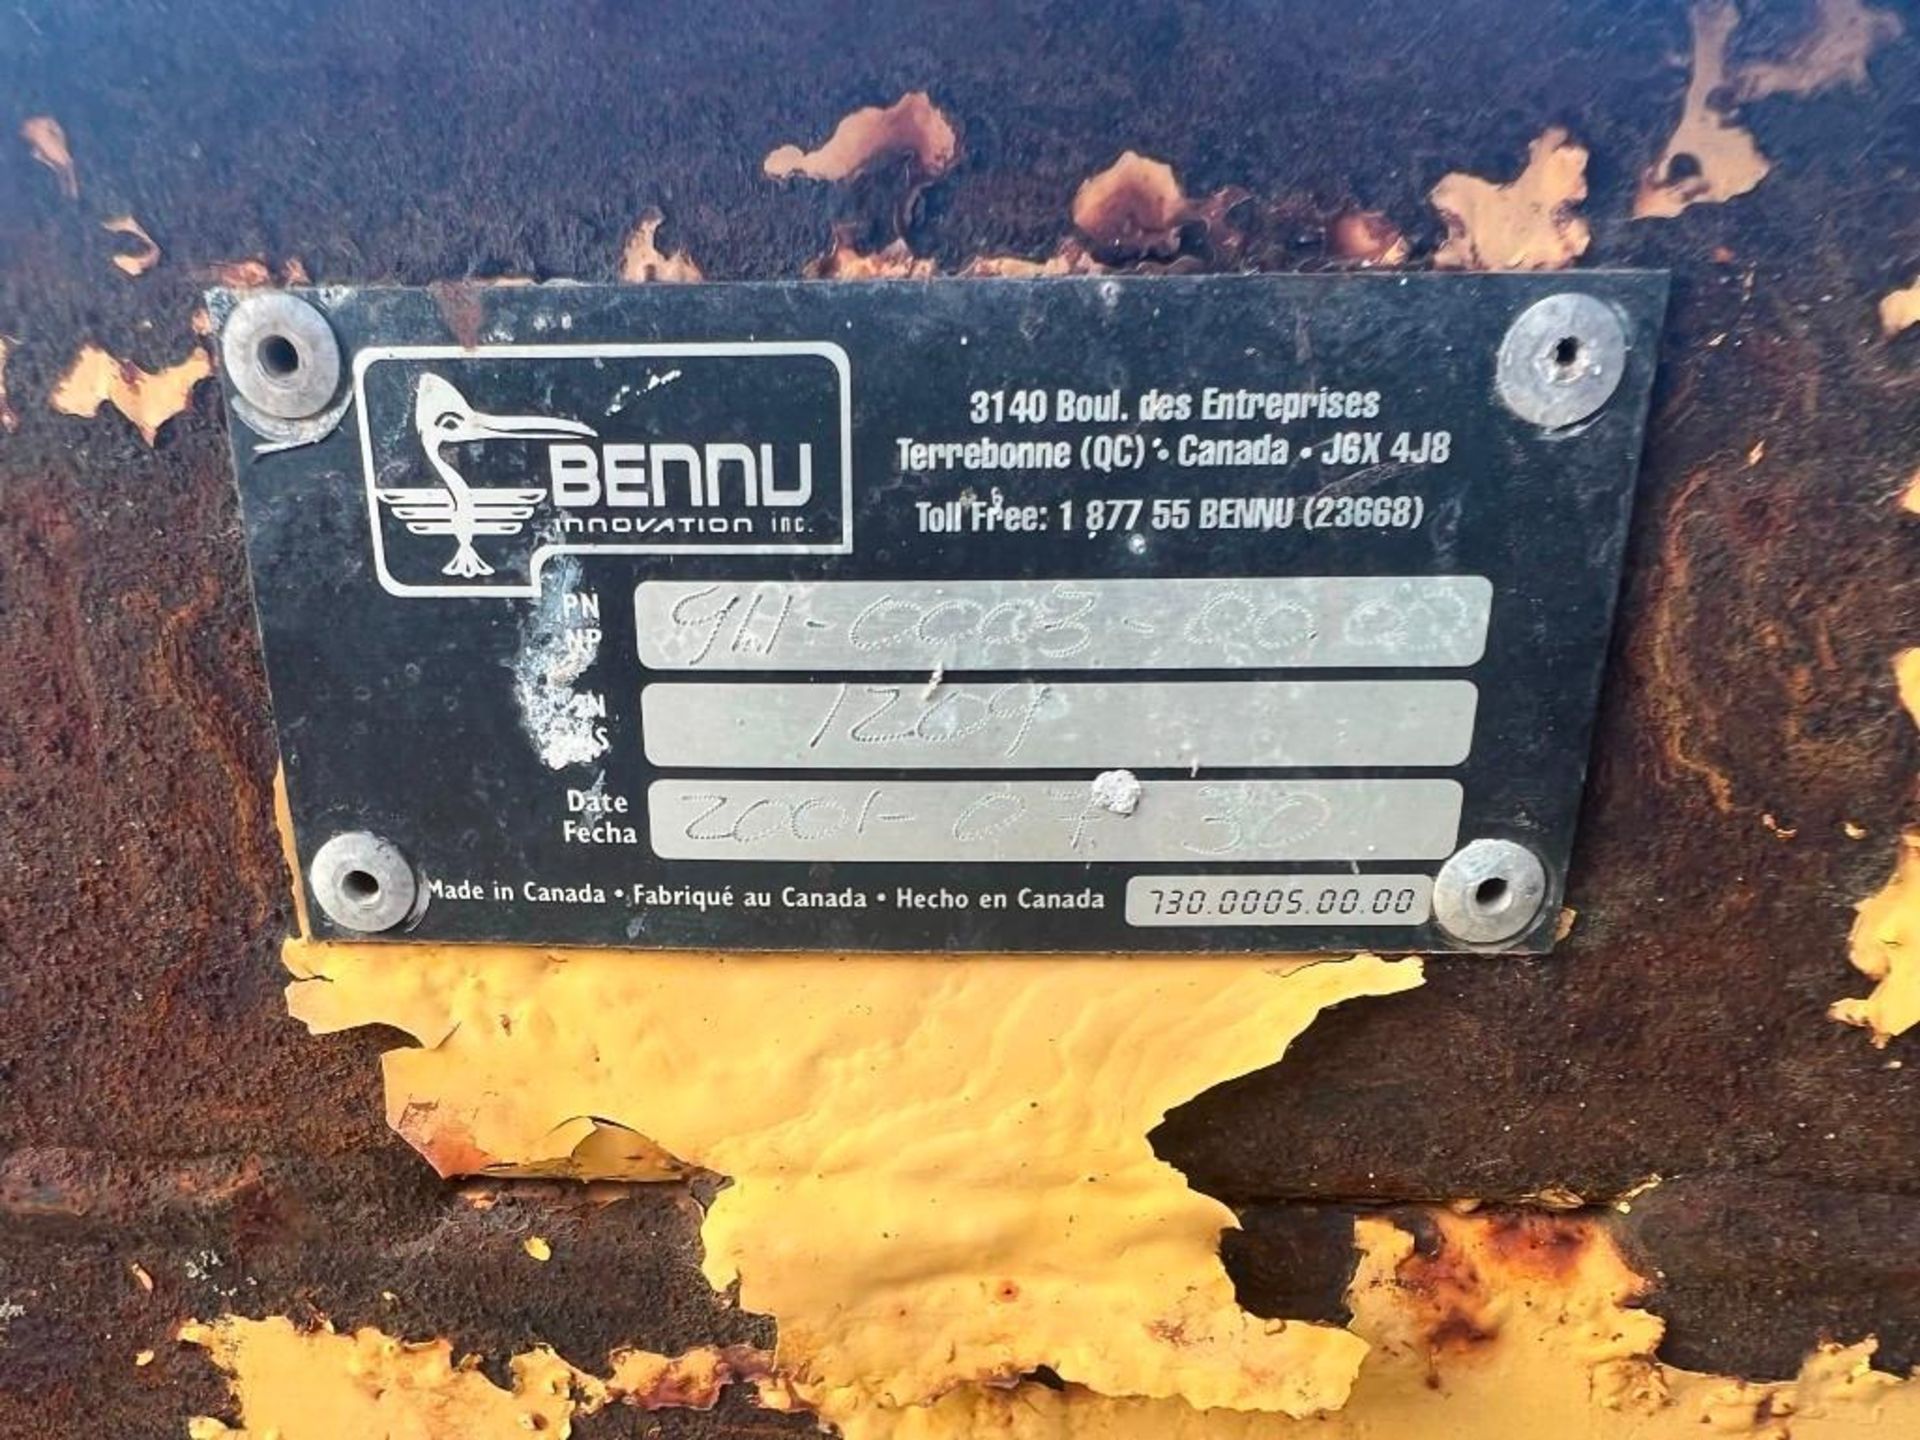 Bennu mast climbing work platform, located in Mt. Pleasant, IA. - Image 57 of 60